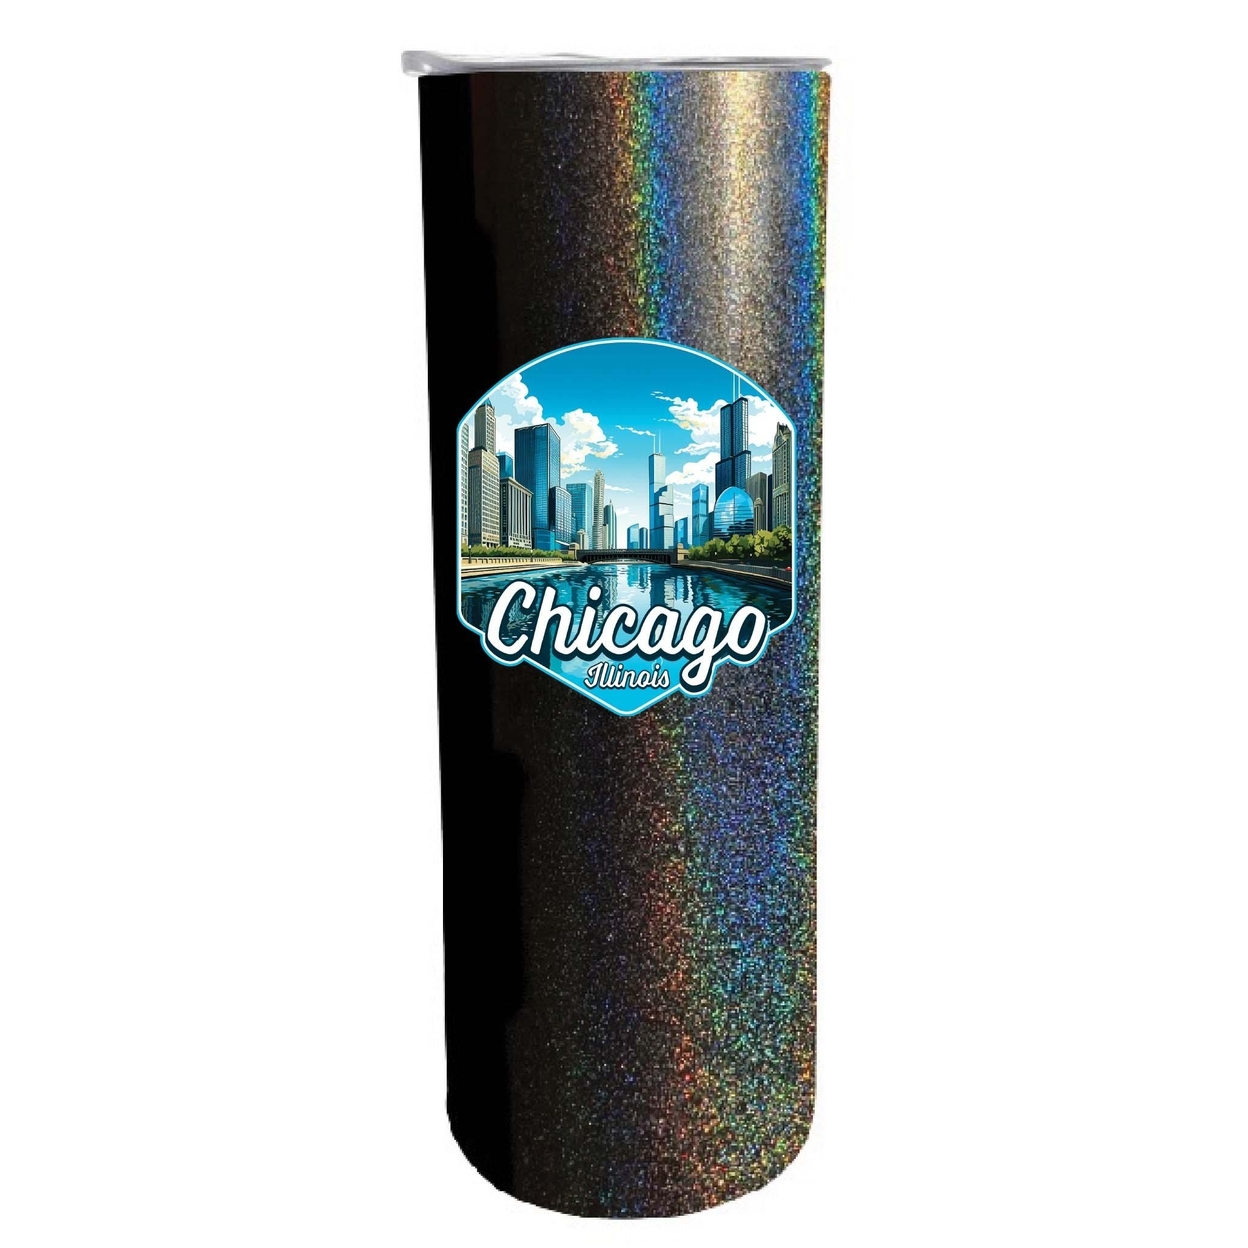 Chicago Illinois A Souvenir 20 Oz Insulated Skinny Tumbler - Black Glitter,,4-Pack